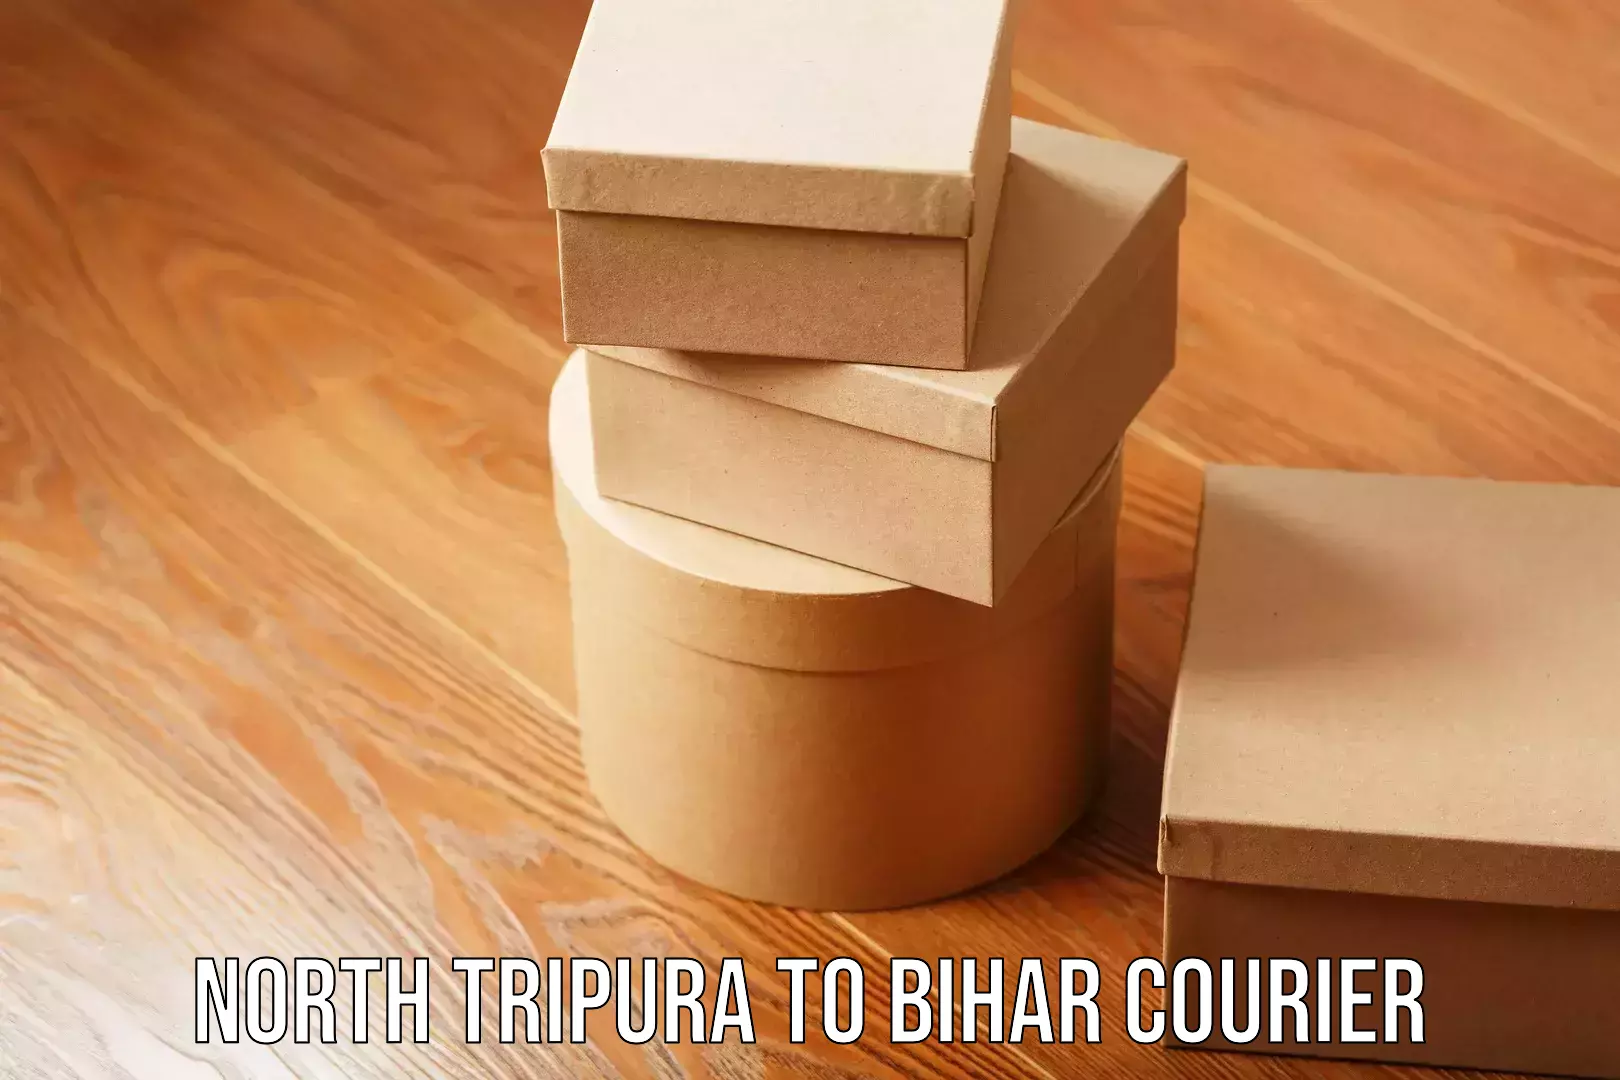 Speedy delivery service North Tripura to Bihar